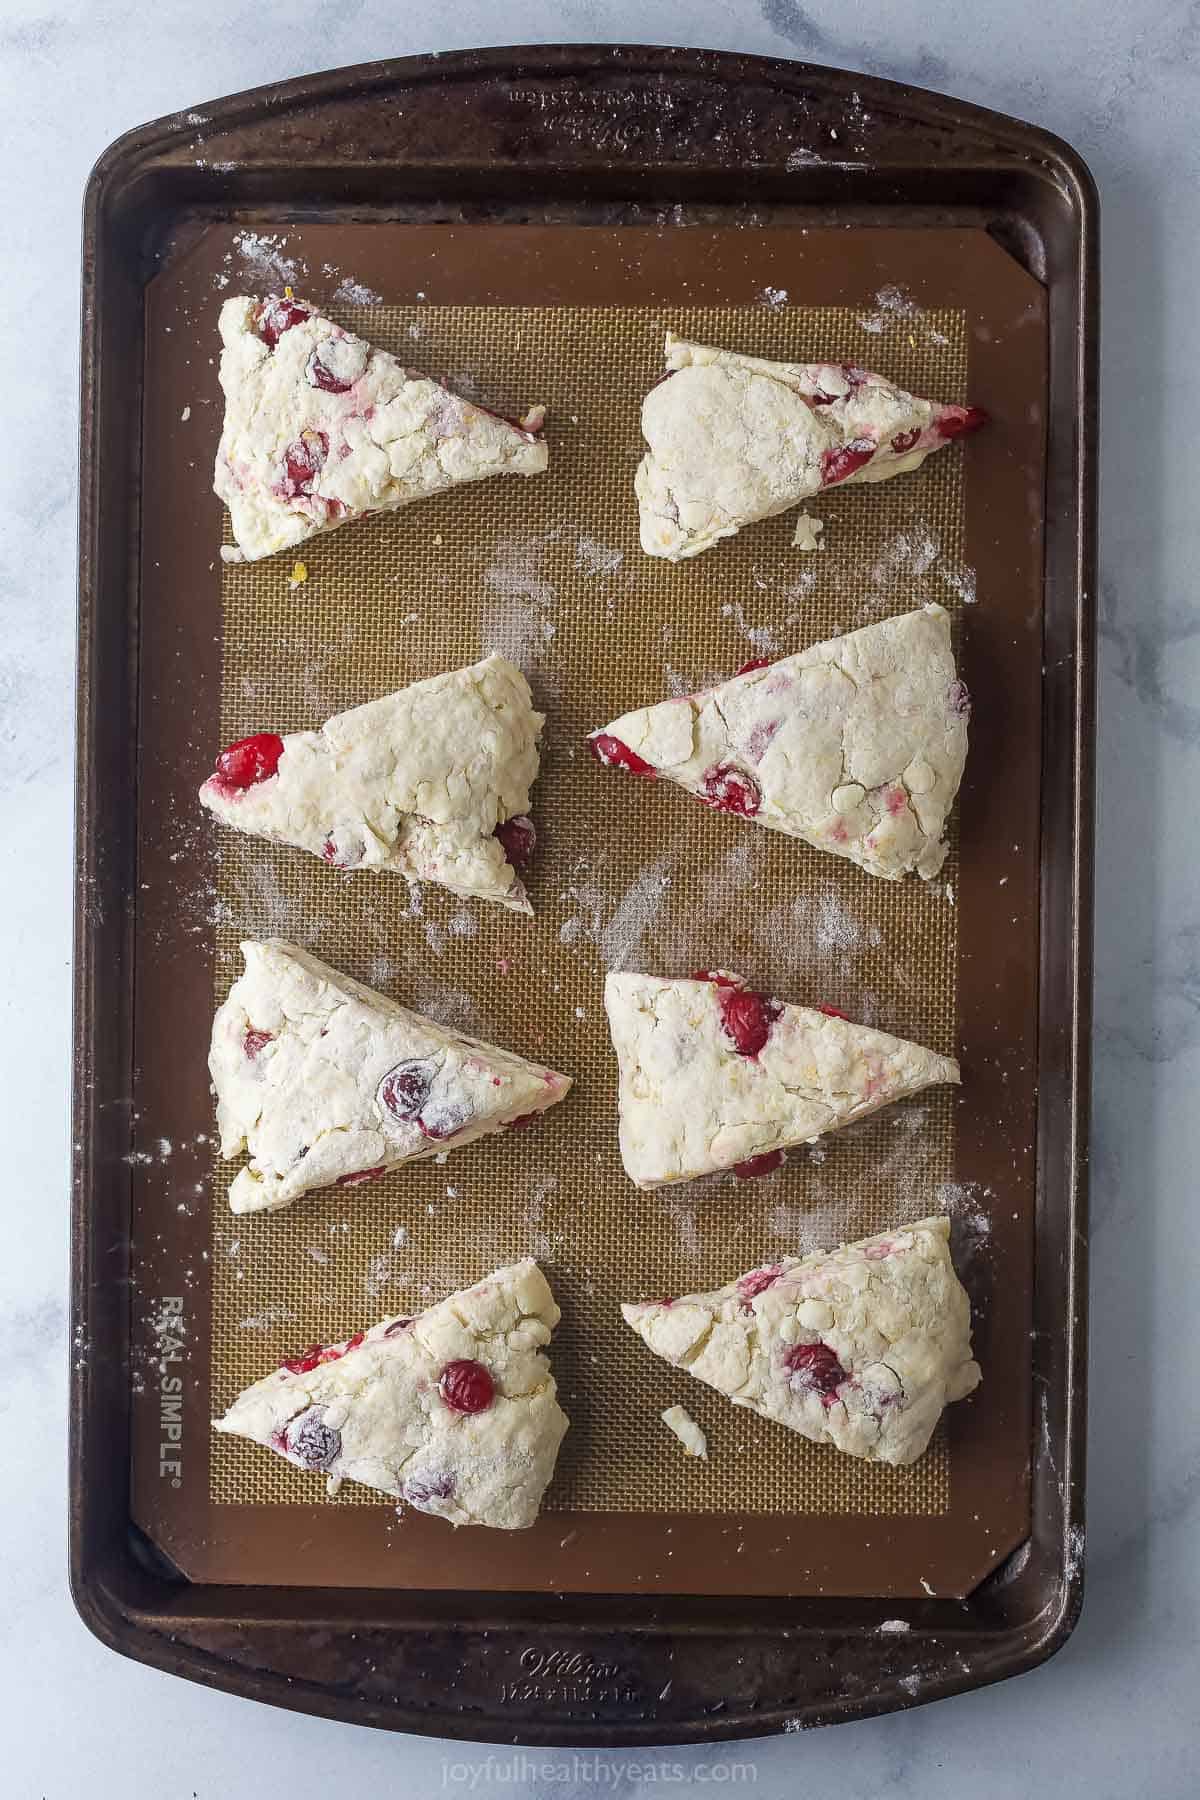 Sliced scones on the baking sheet. 